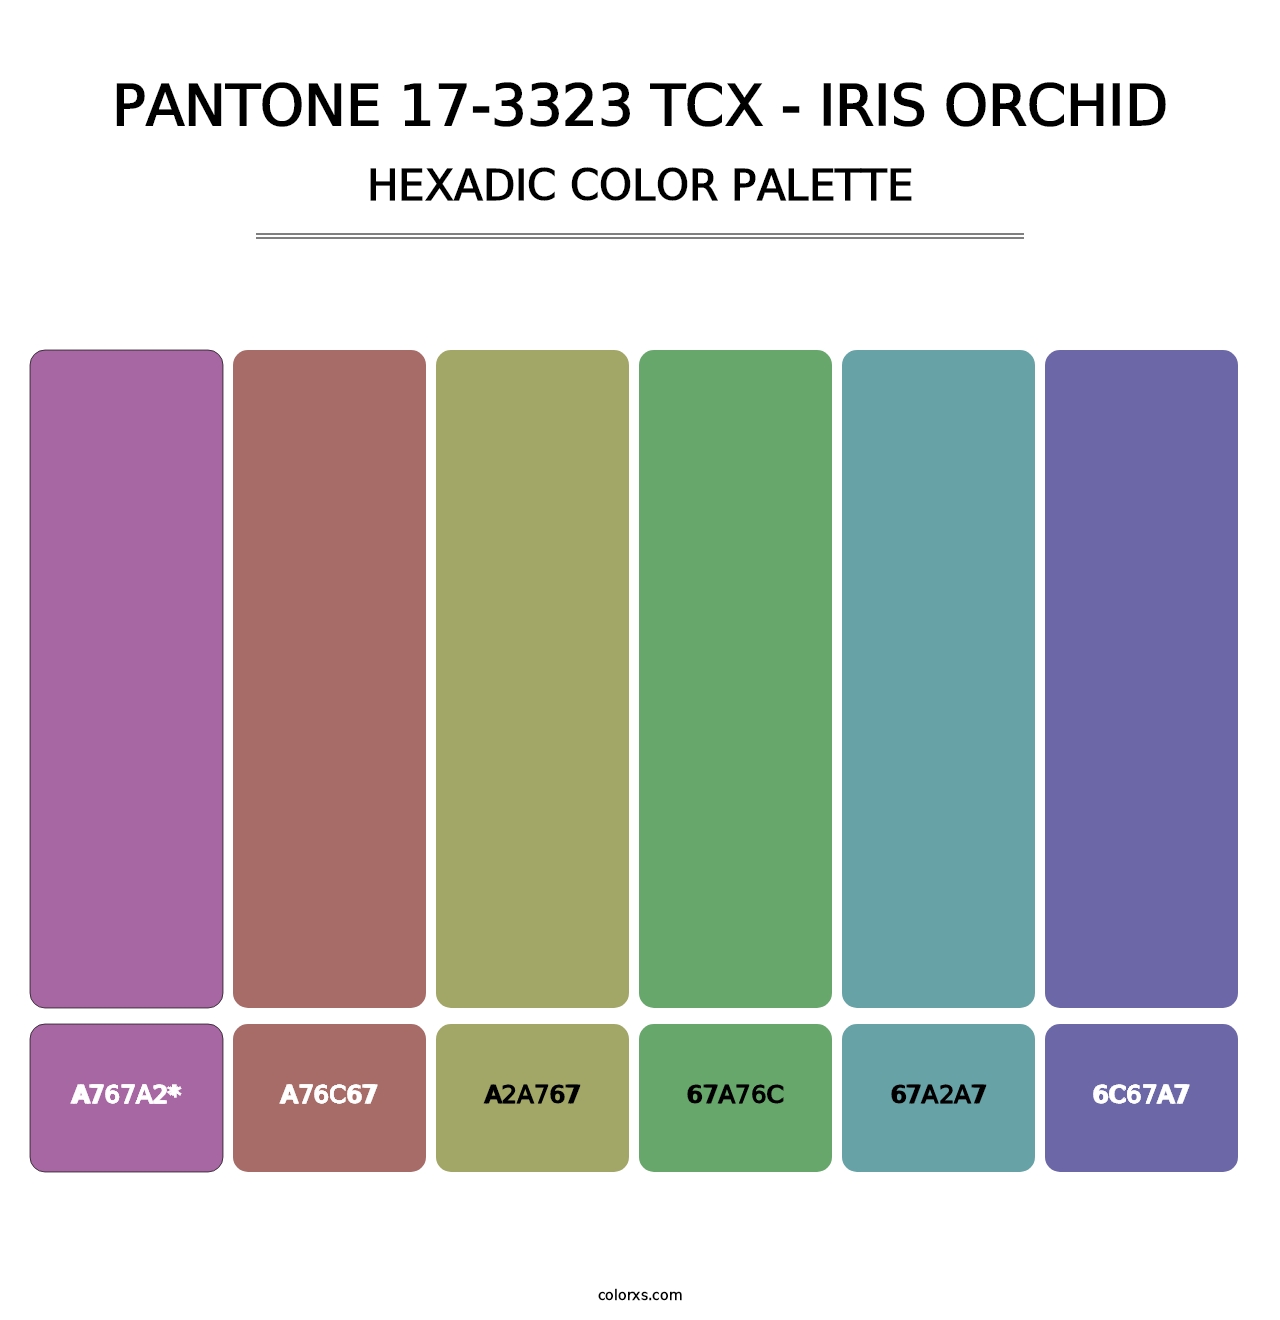 PANTONE 17-3323 TCX - Iris Orchid - Hexadic Color Palette